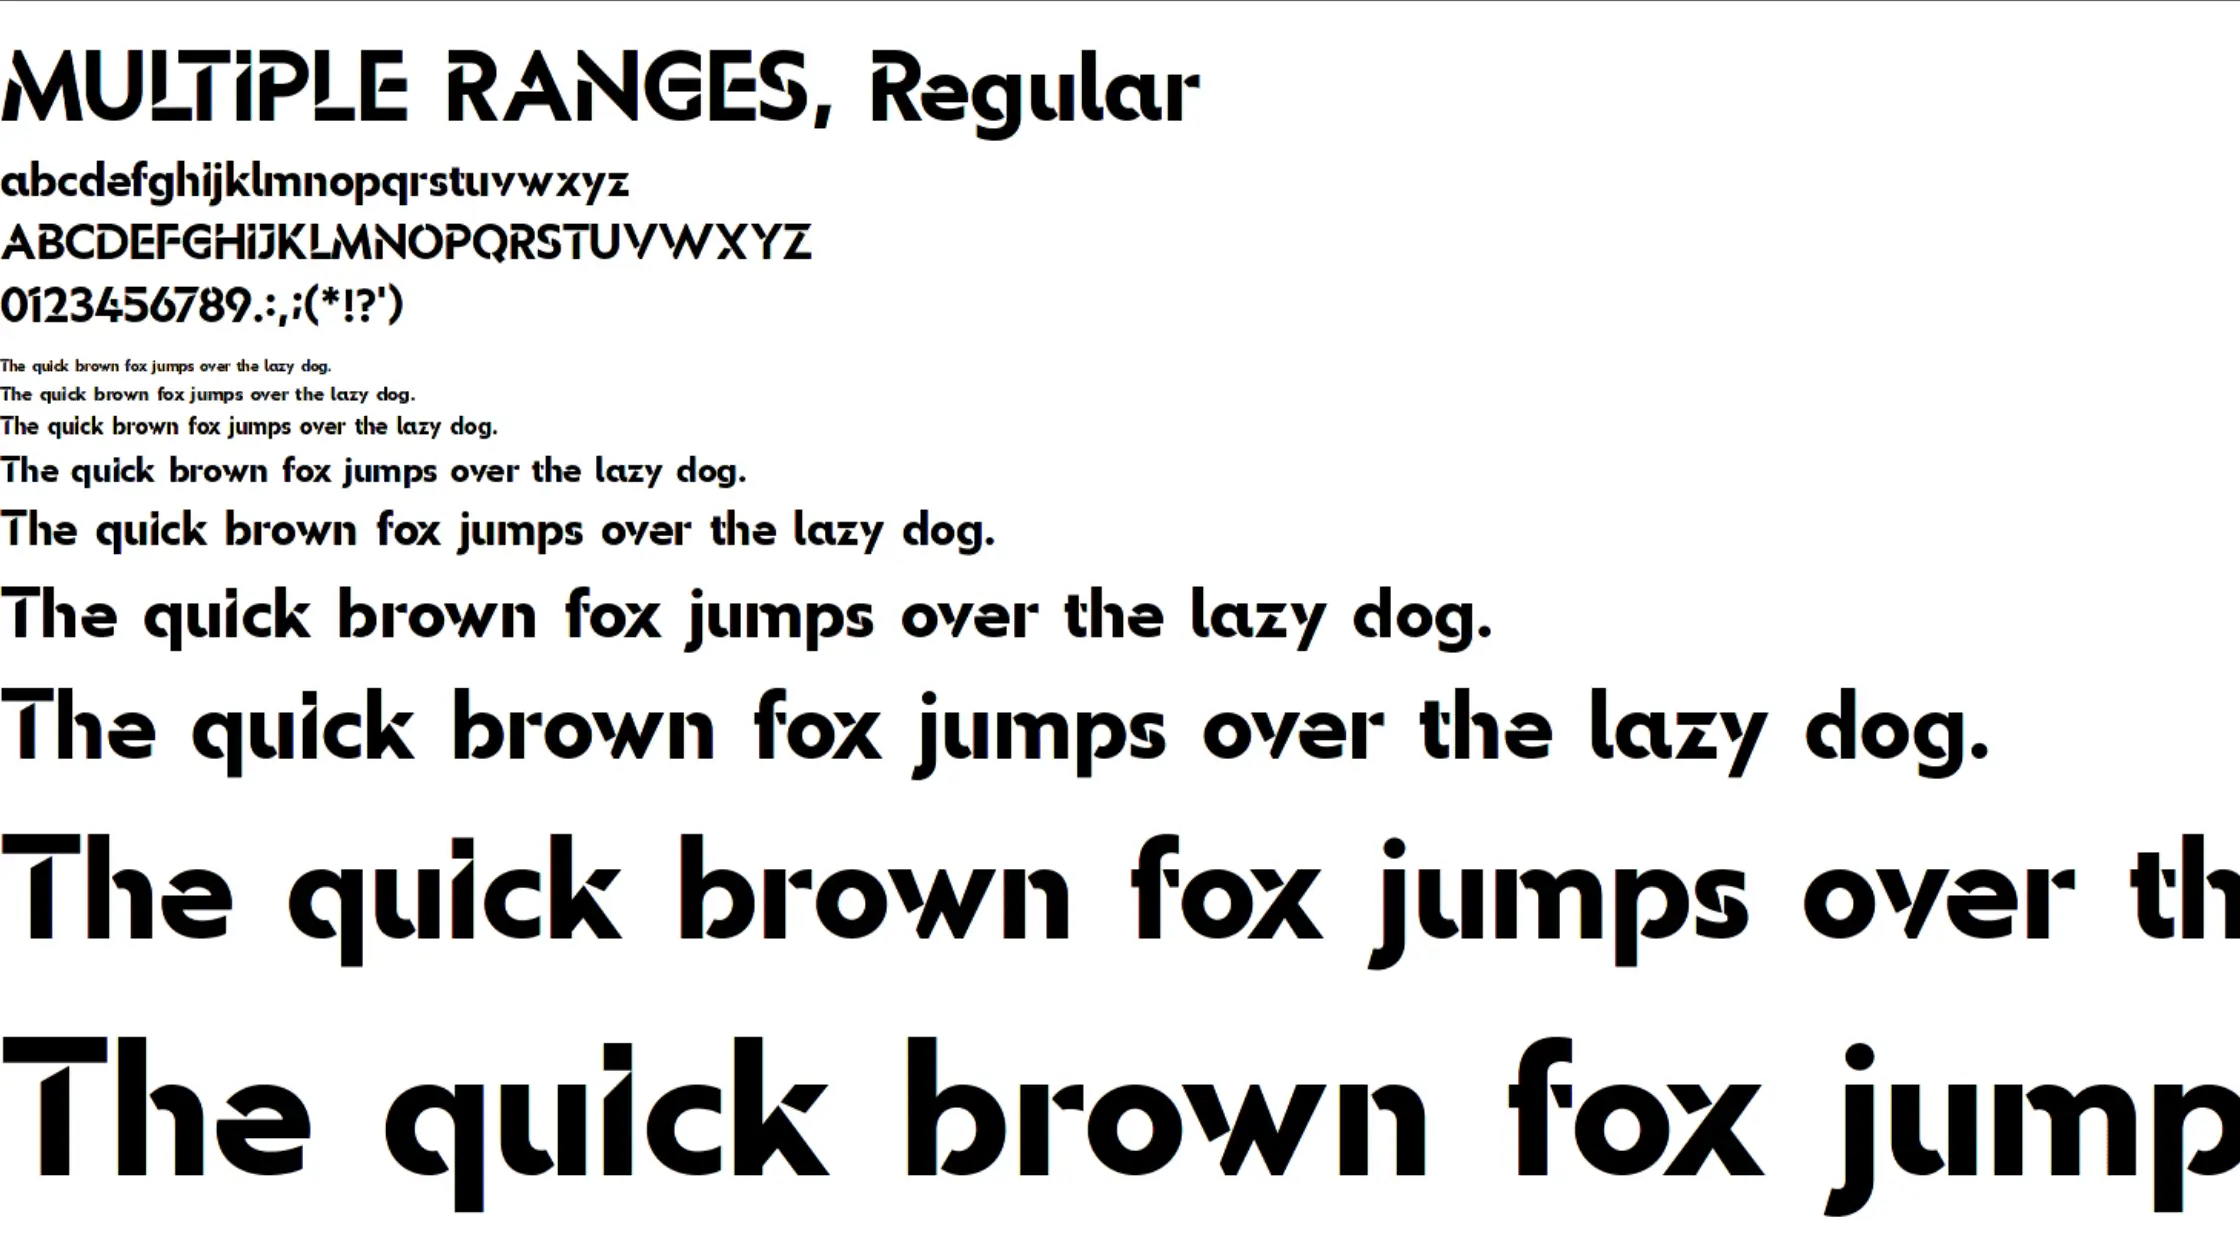 Multiple Ranges Font